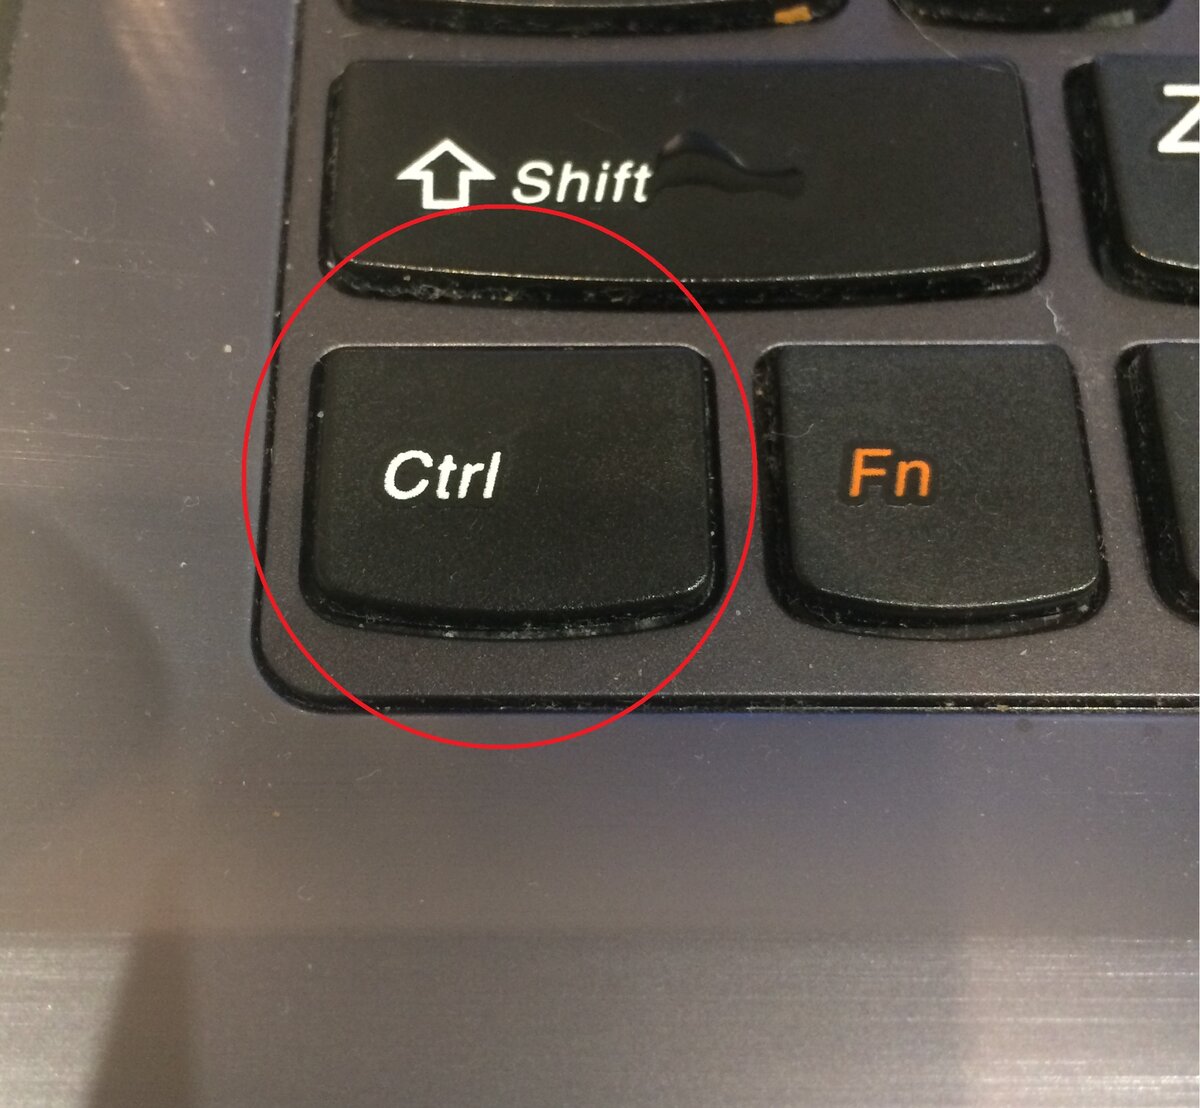 Control клавиша. Кнопка FN+f8. Клавиша контрол шифт. Клавиша контрол на клавиатуре. Кнопка Ctrl на клавиатуре.